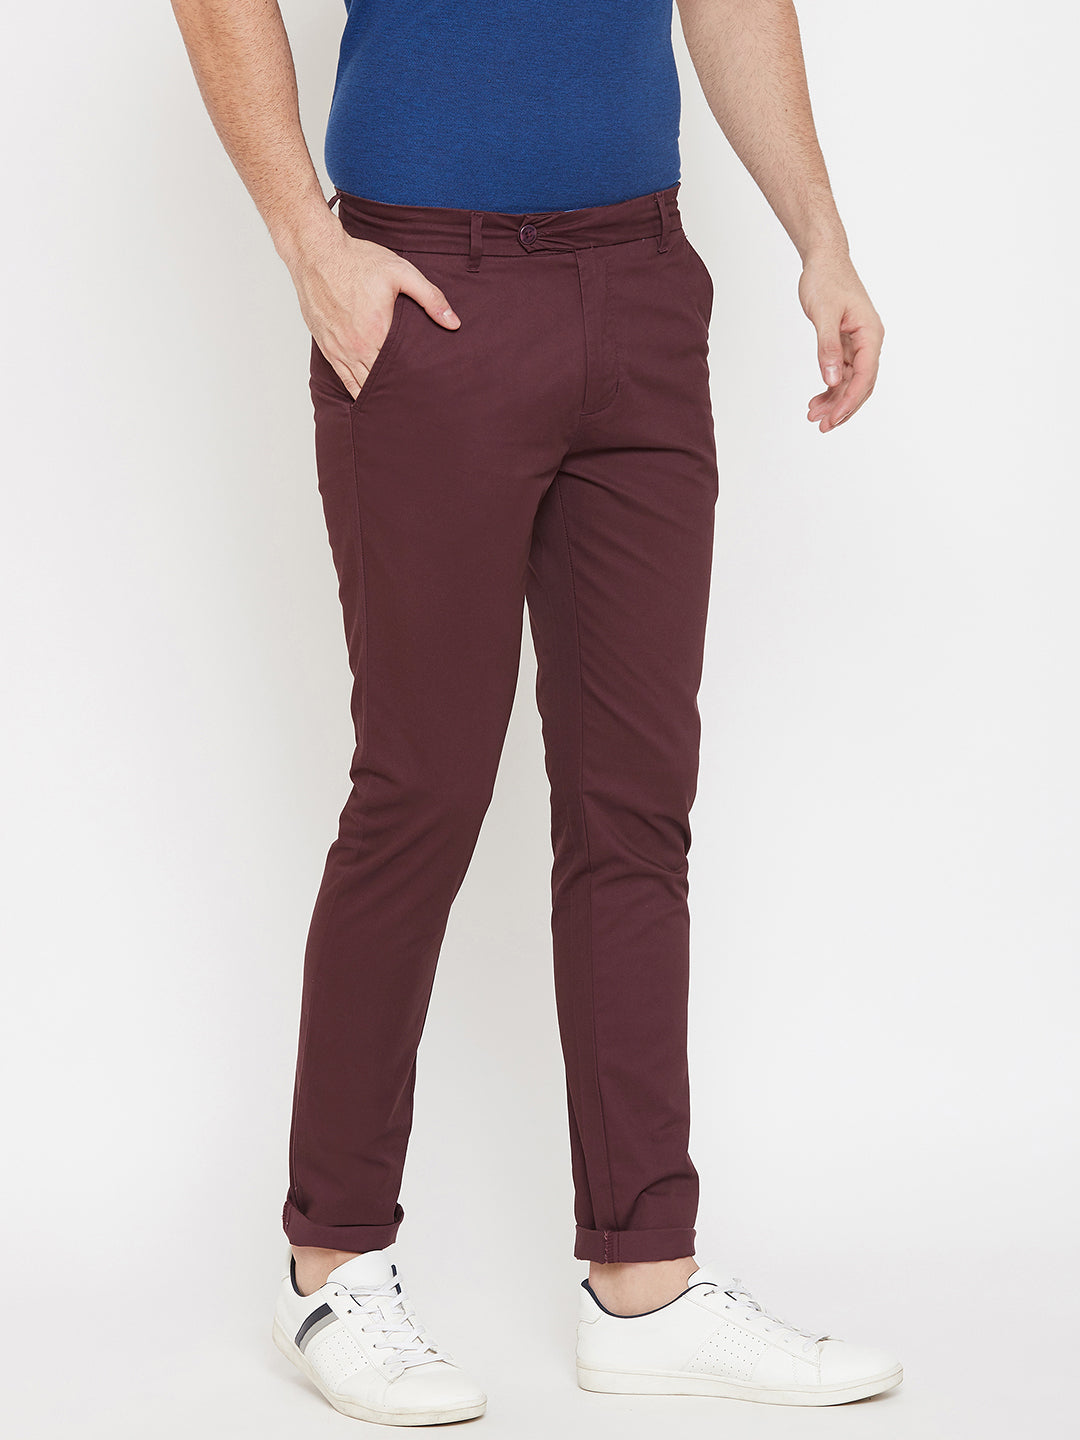 Maroon Slim fit Trousers - Men Trousers